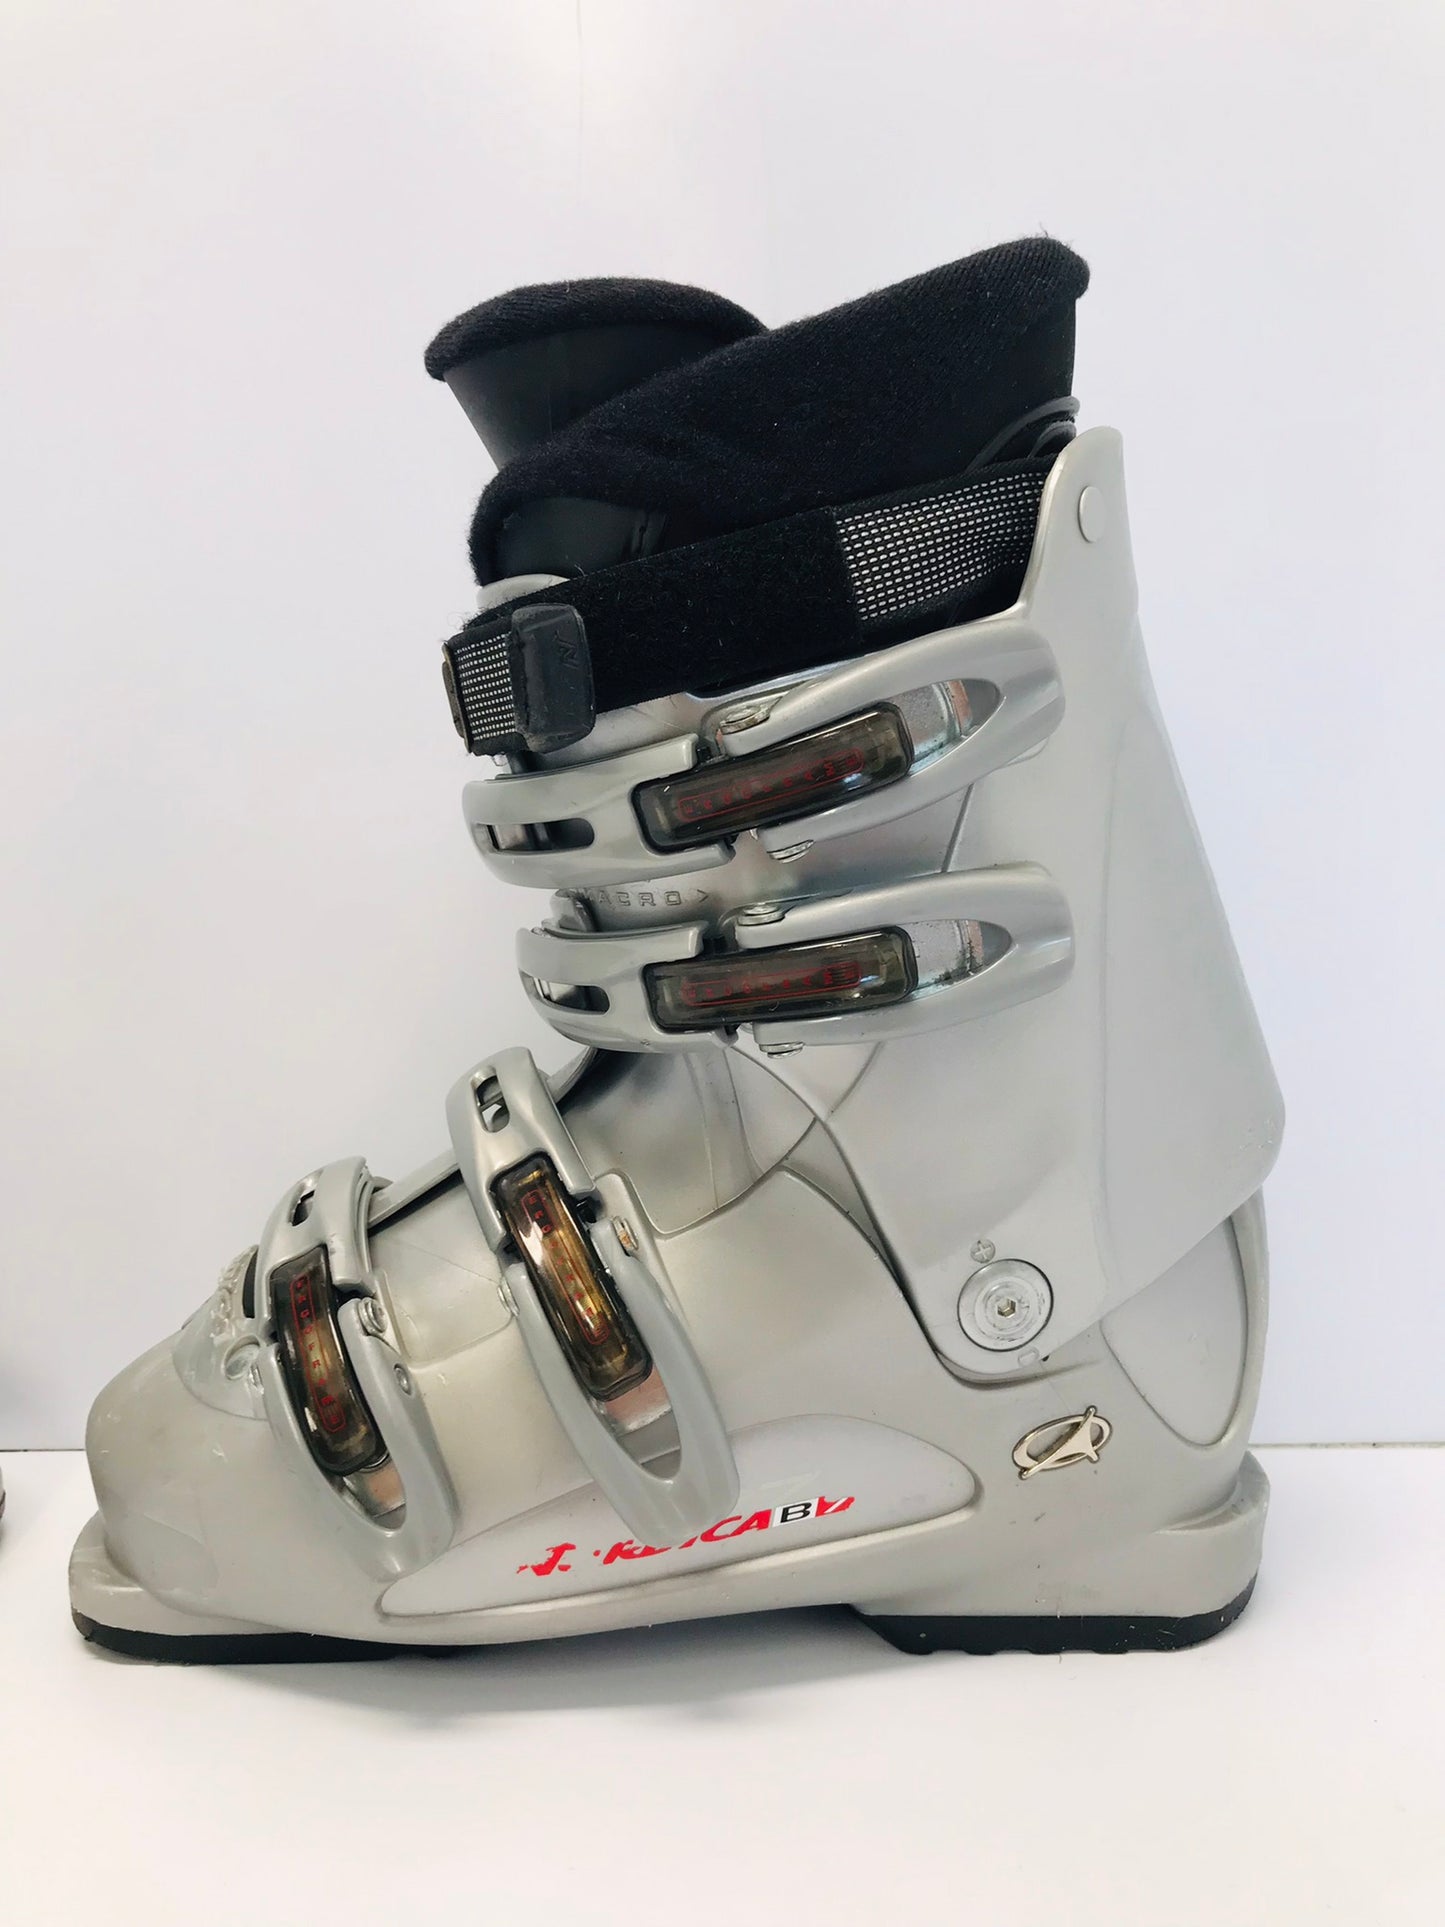 Ski Boots Mondo Size 24.0 Men's Size 6 Ladies Size 7  280 mm Nordica Grey Black